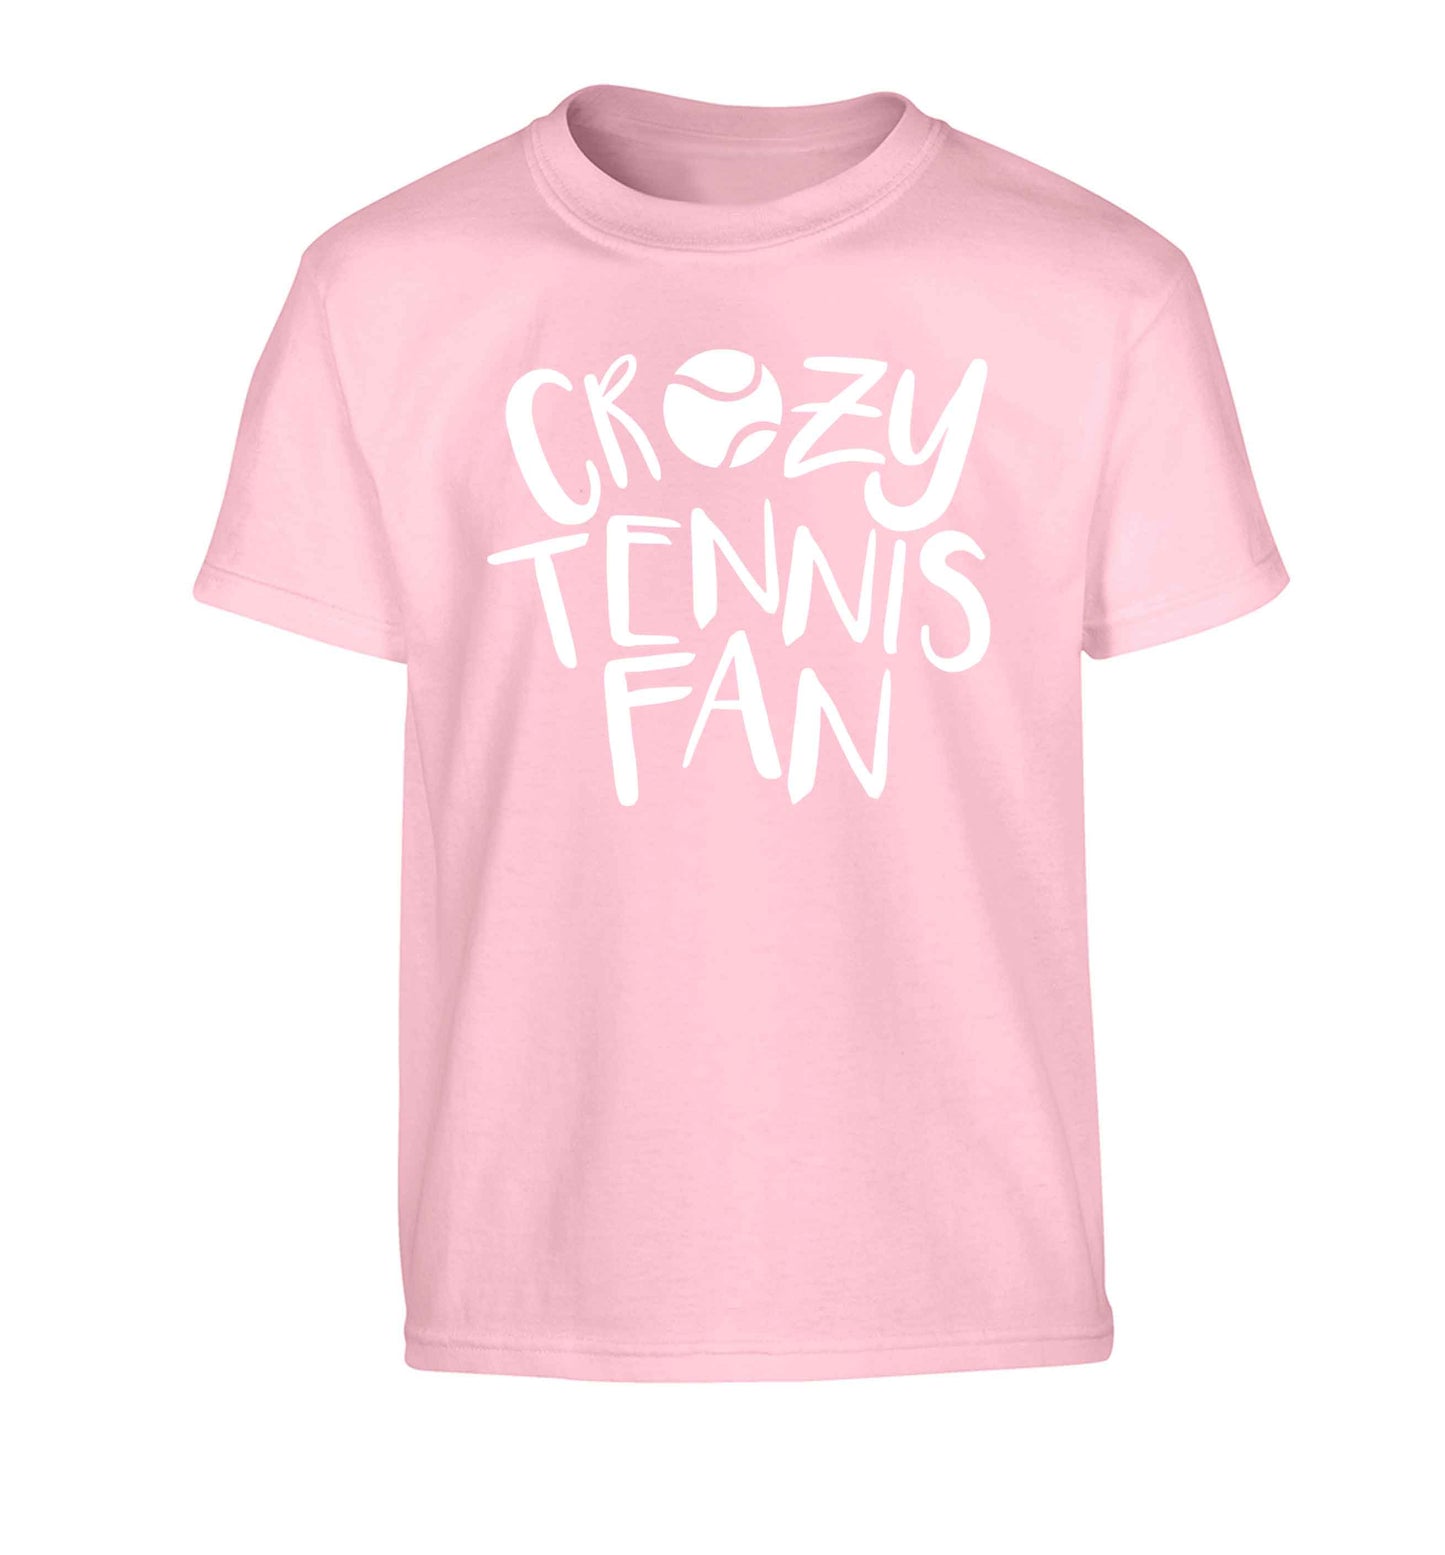 Crazy tennis fan Children's light pink Tshirt 12-13 Years